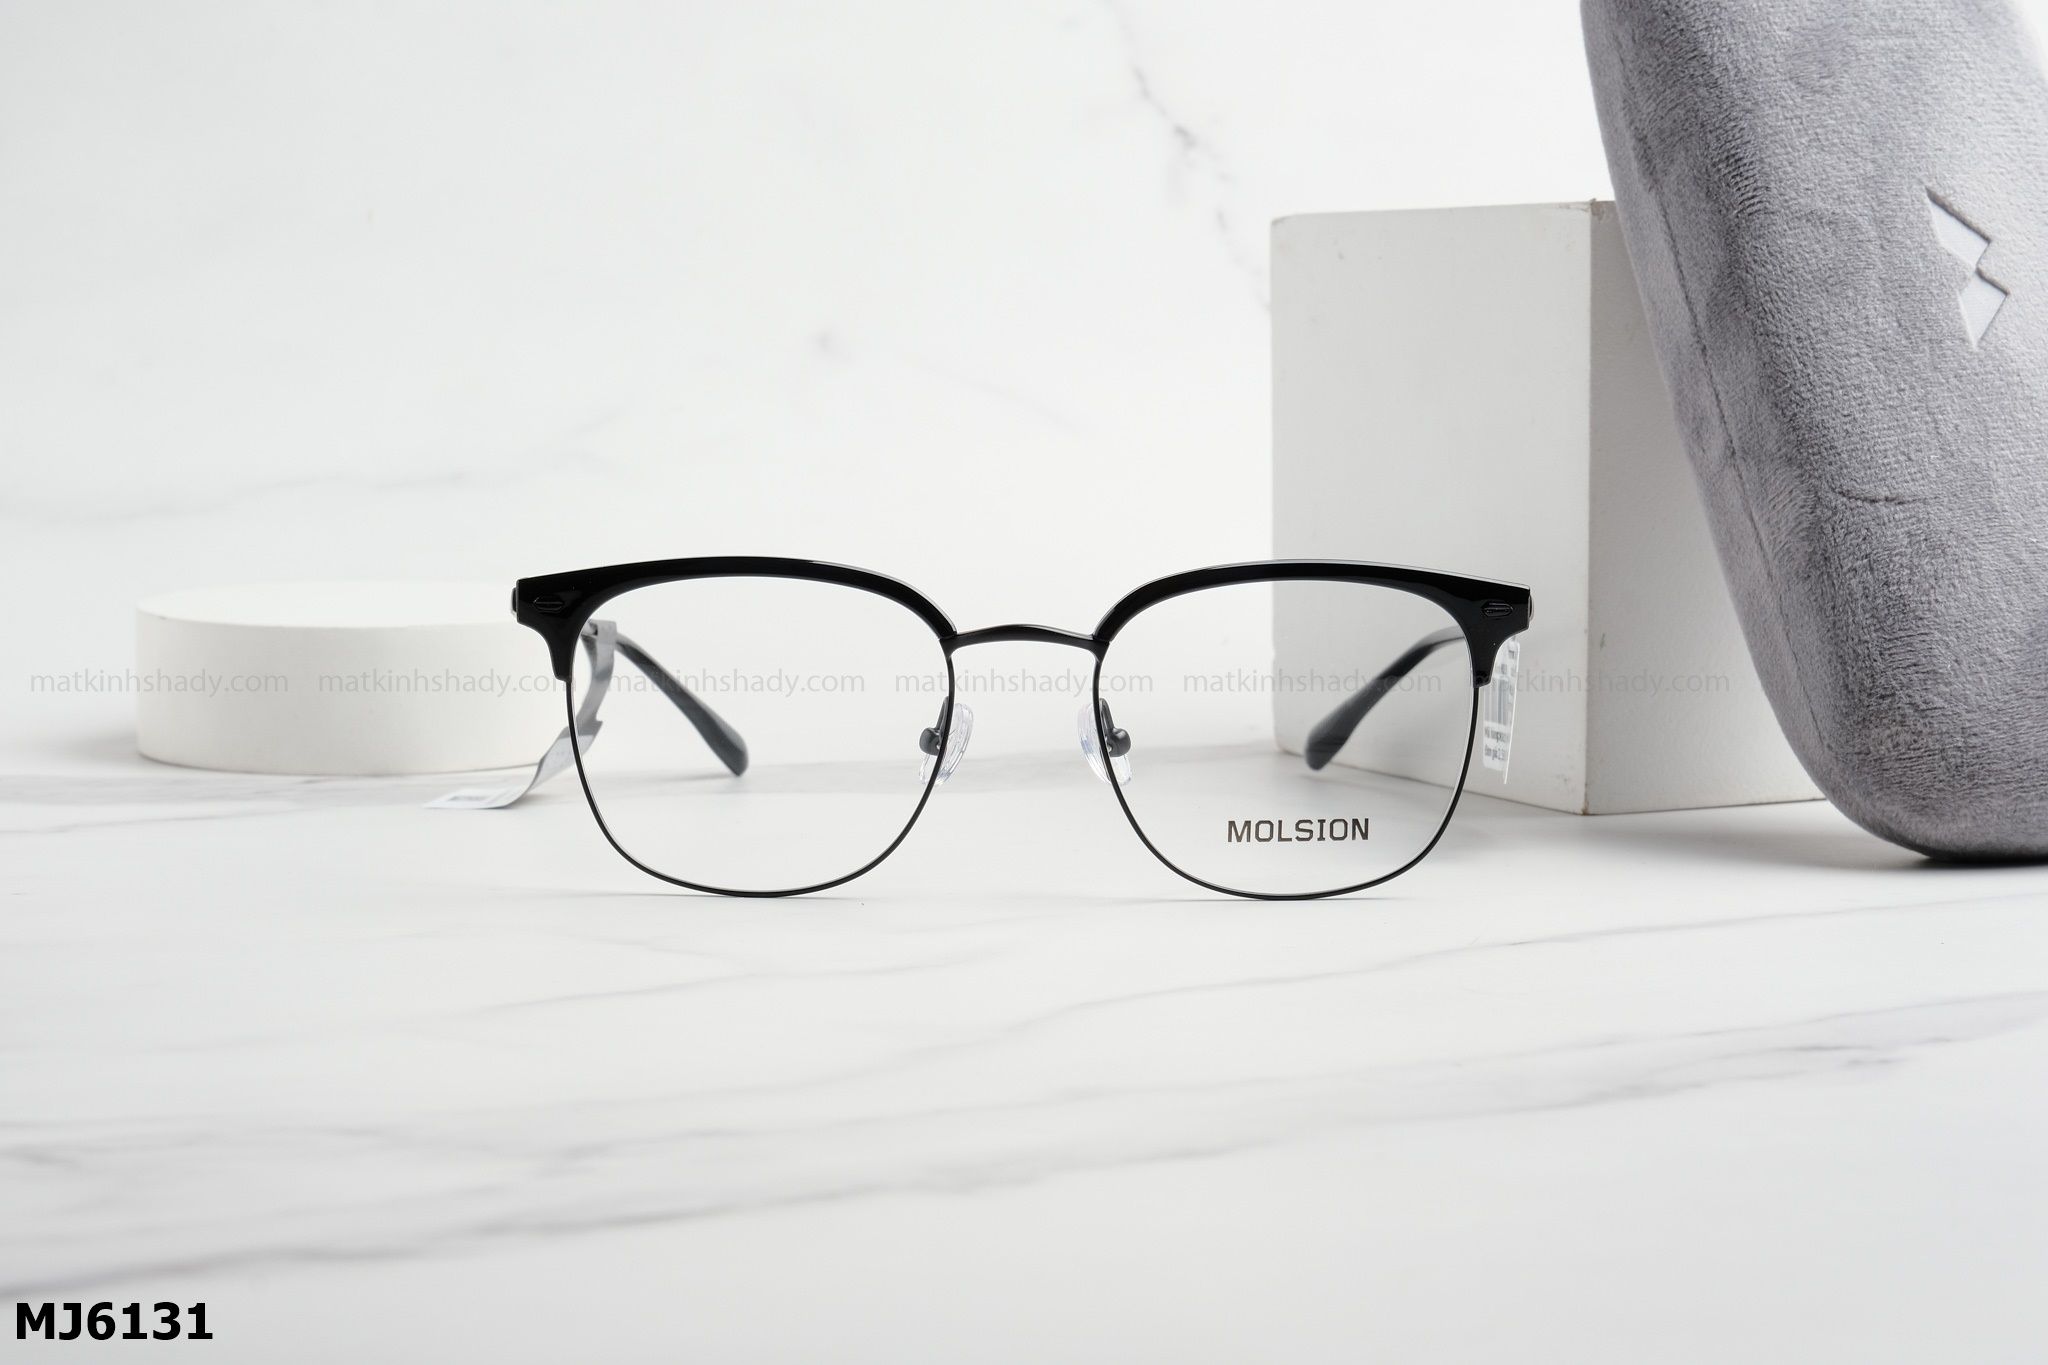  Molsion Eyewear - Glasses - MJ6131 